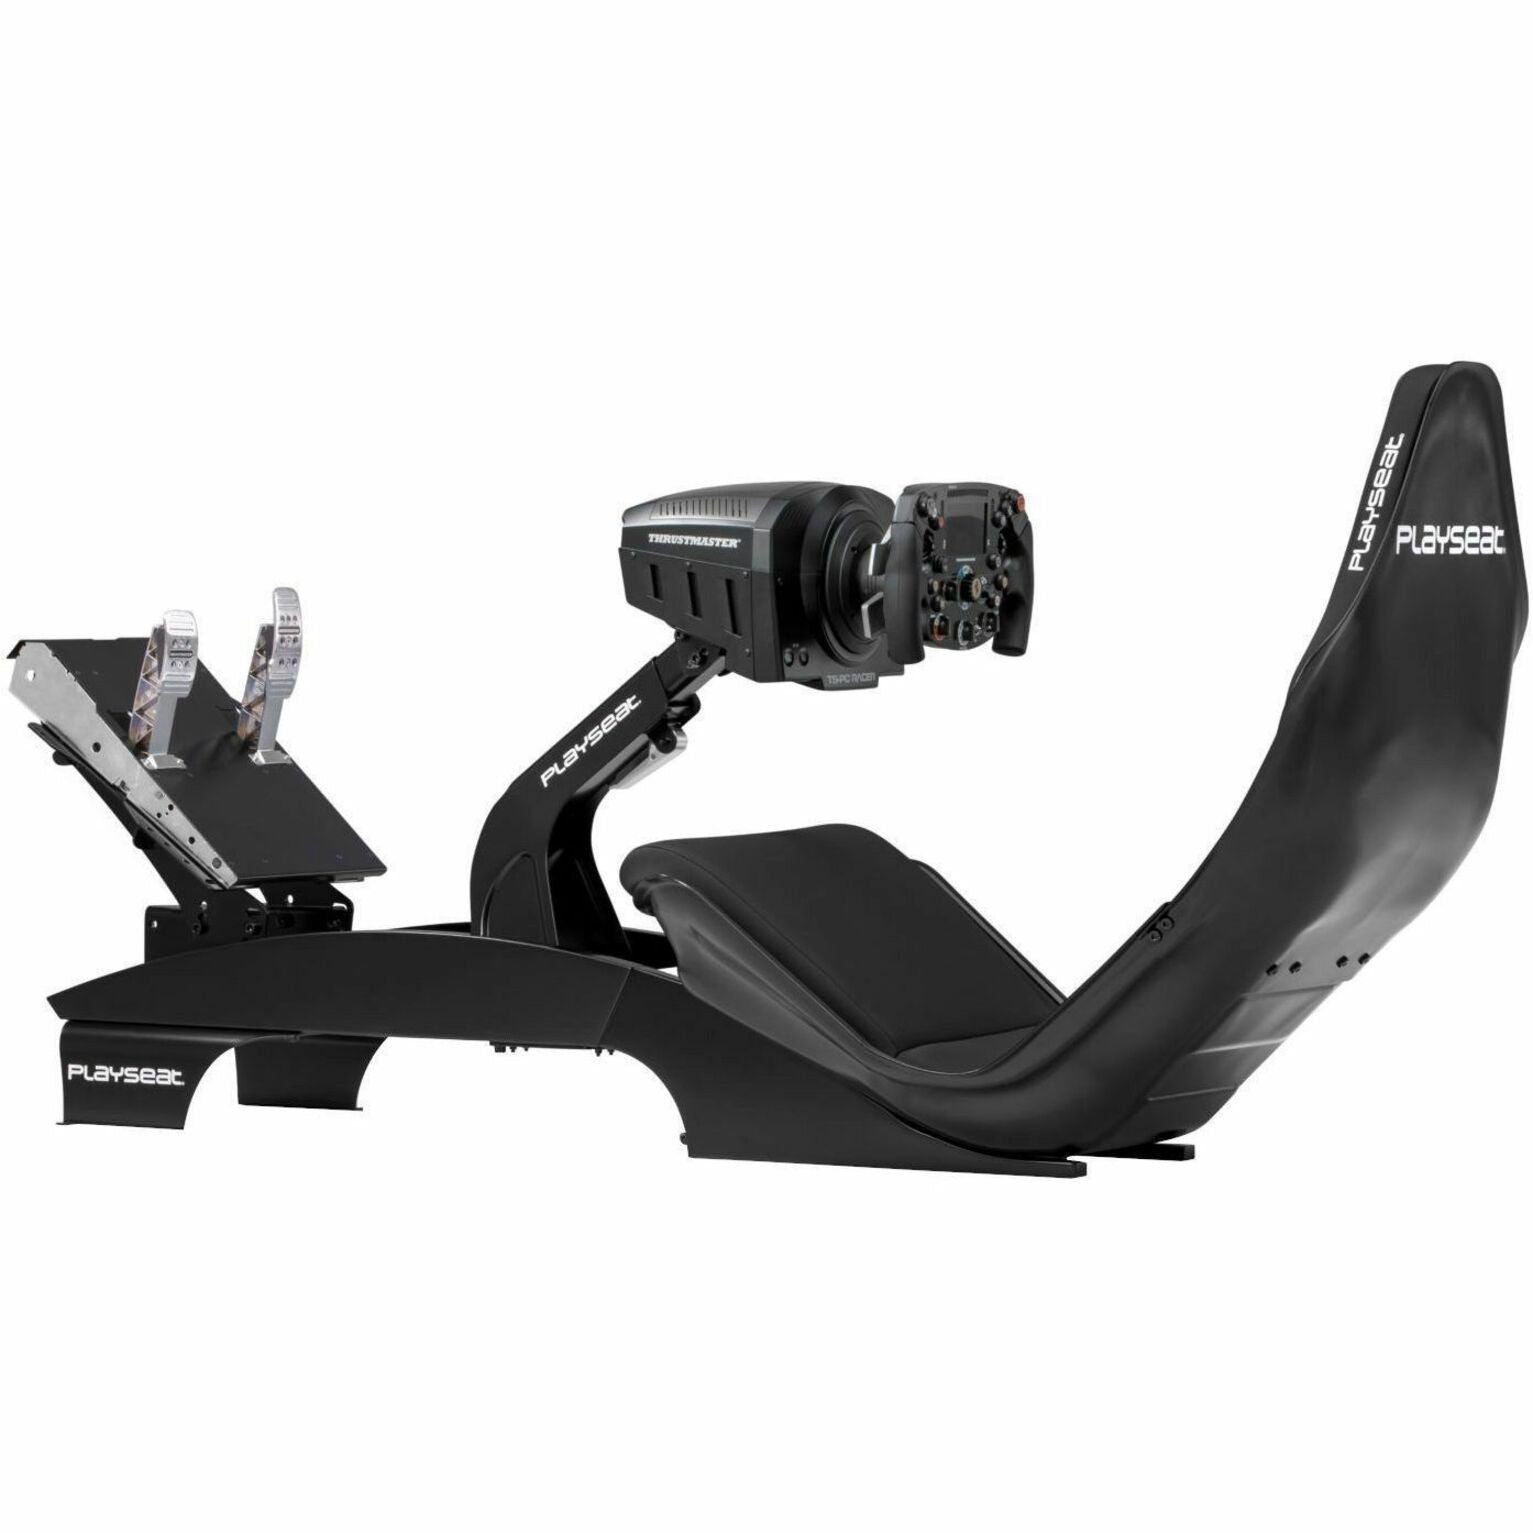 Playseats Formula Black Gaming Chair Komfortabel Höhenverstellbarer Sitz Neigung 